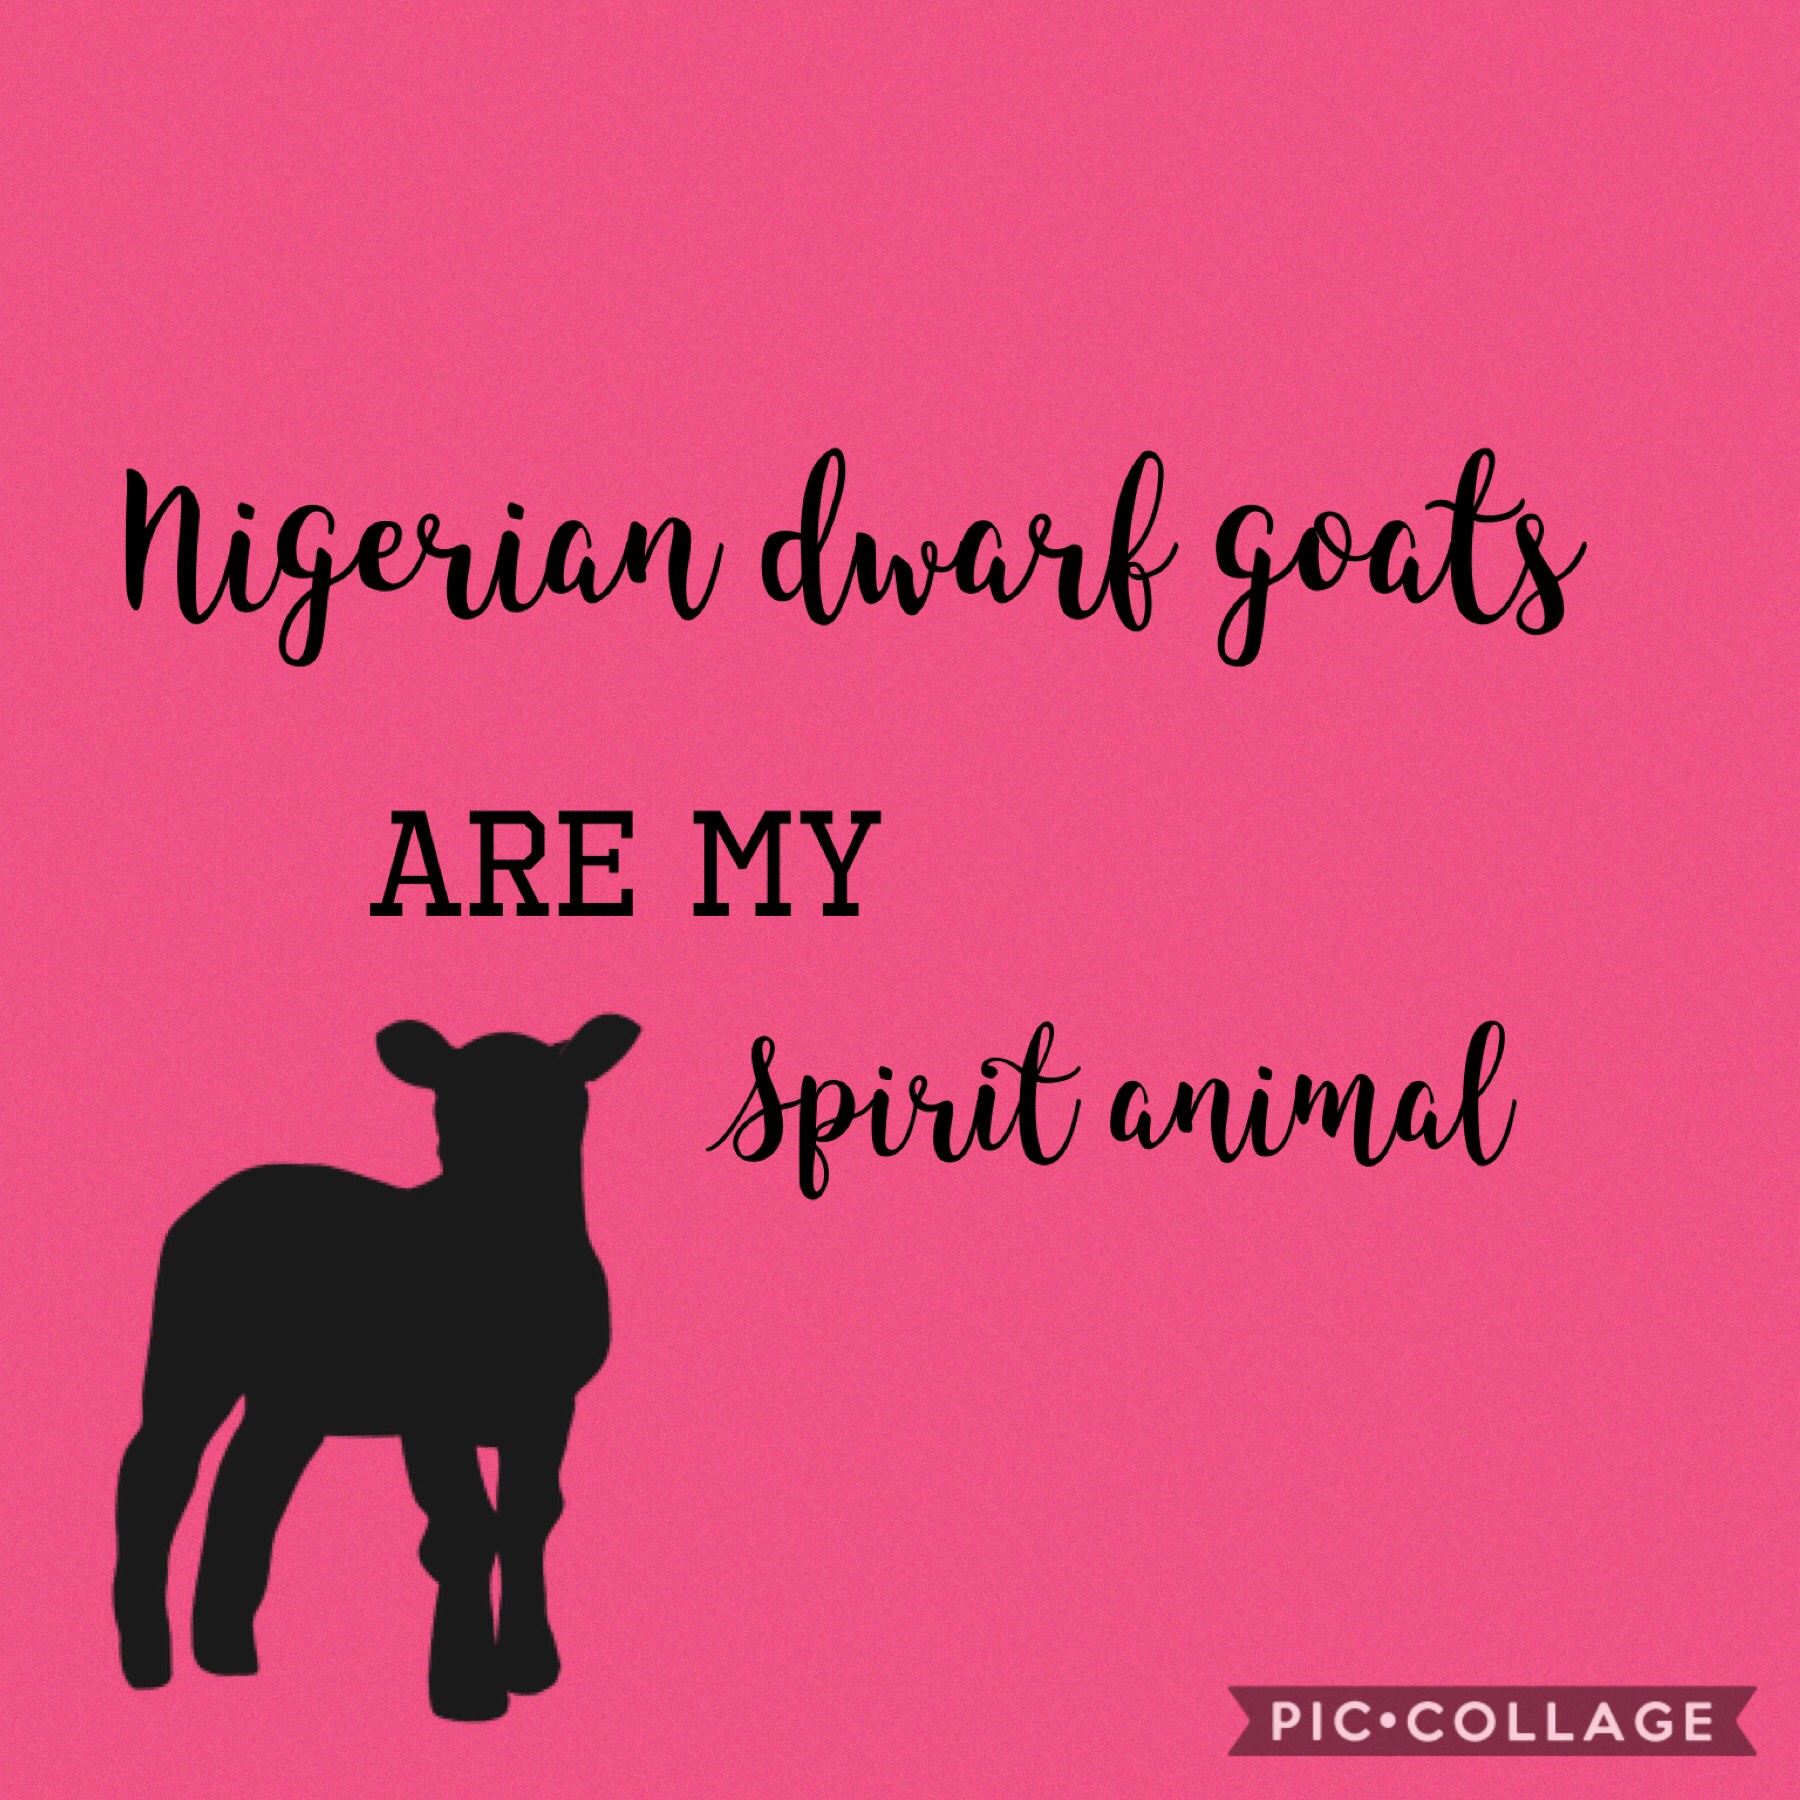 Nigerian dwarf goats forever!